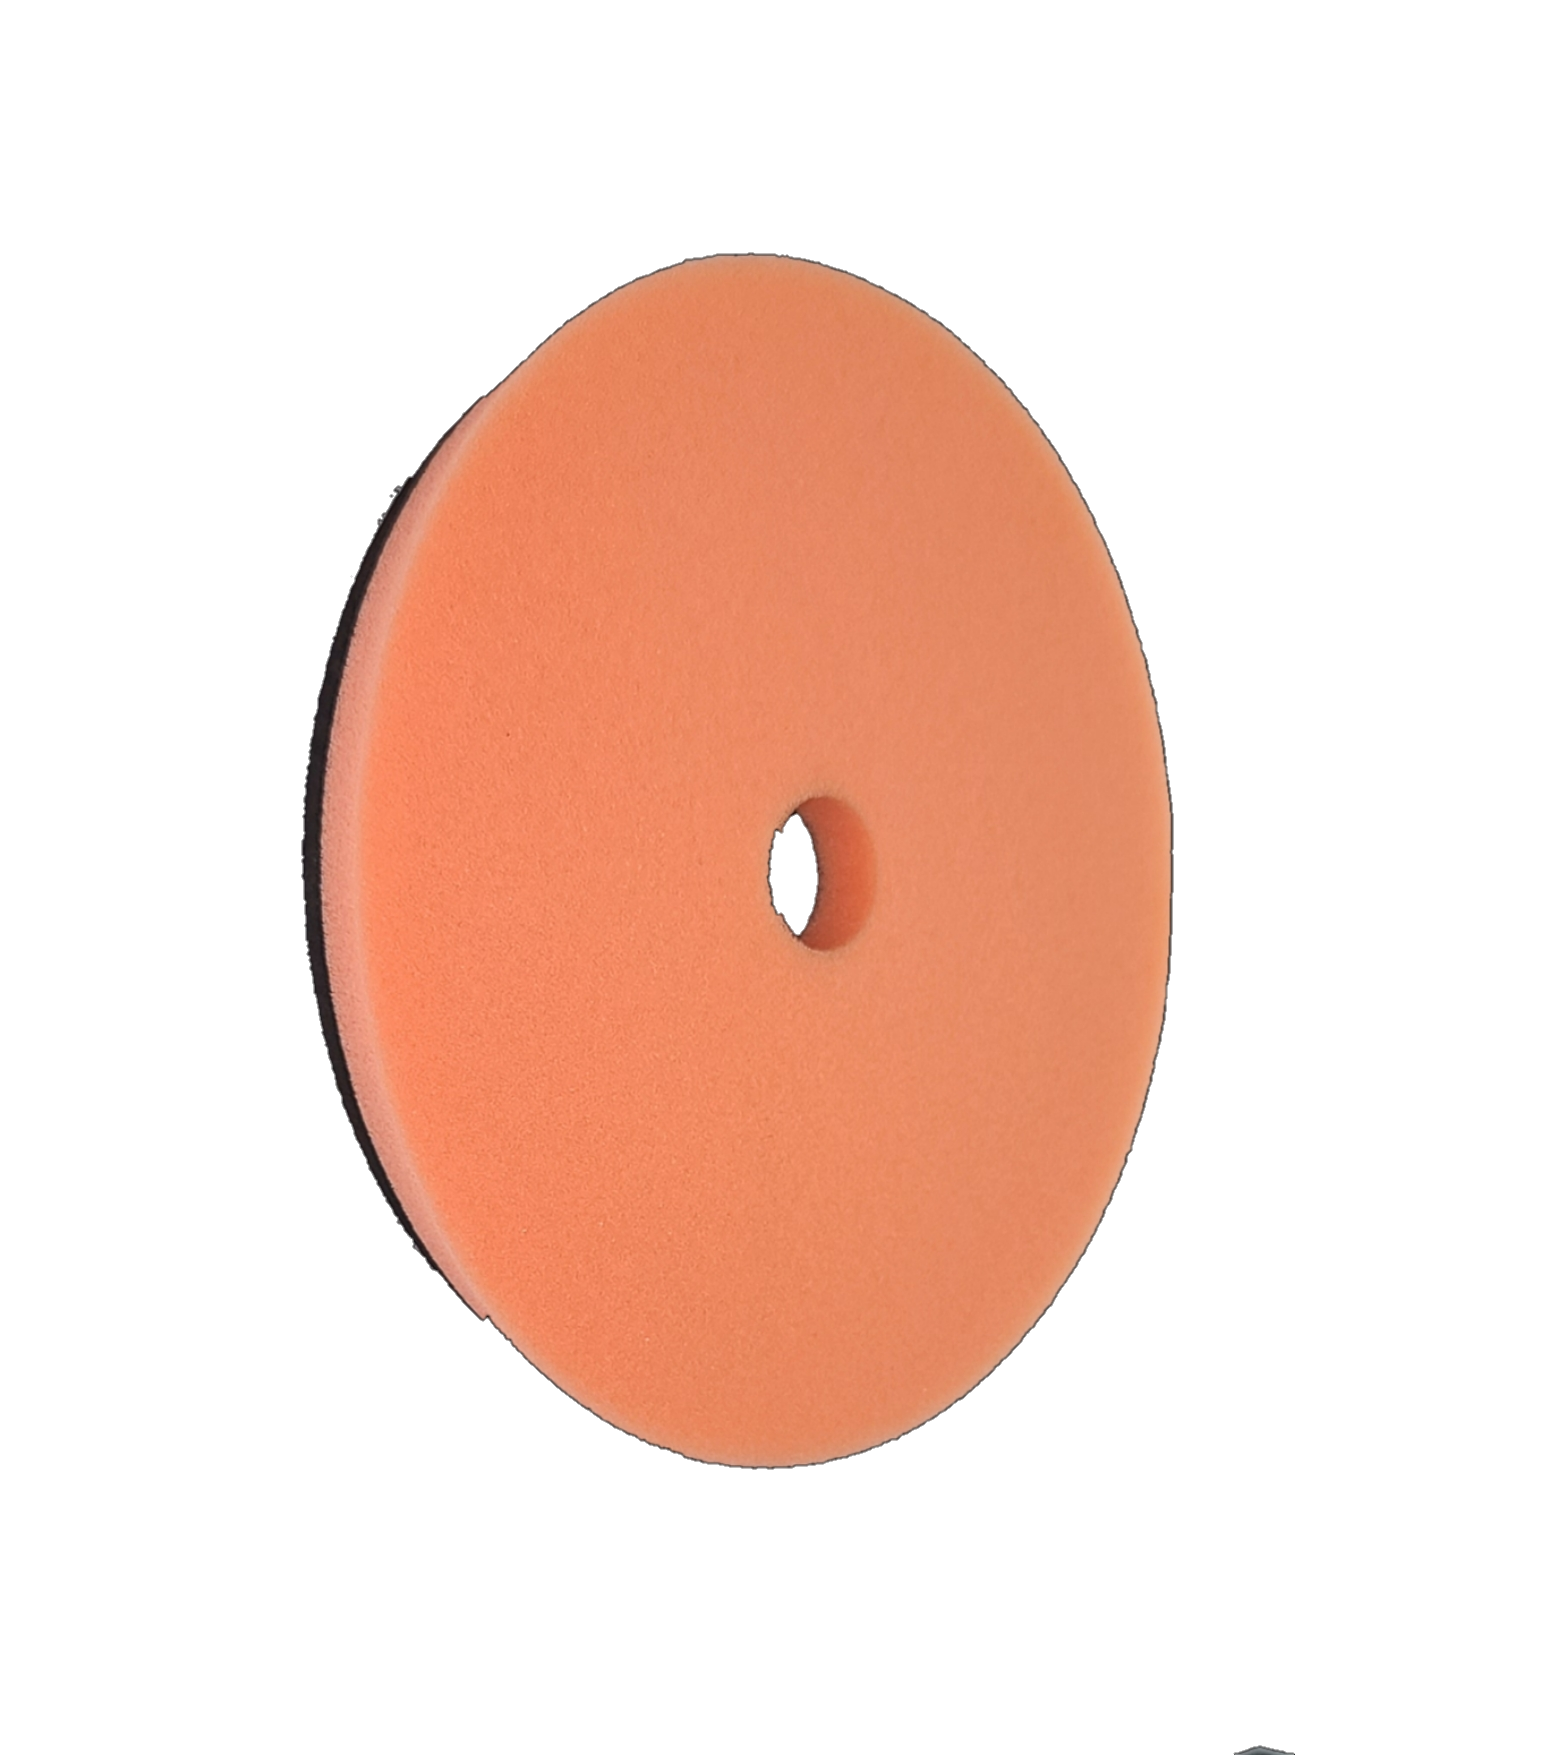 CARPRO Orange Polishing Pad